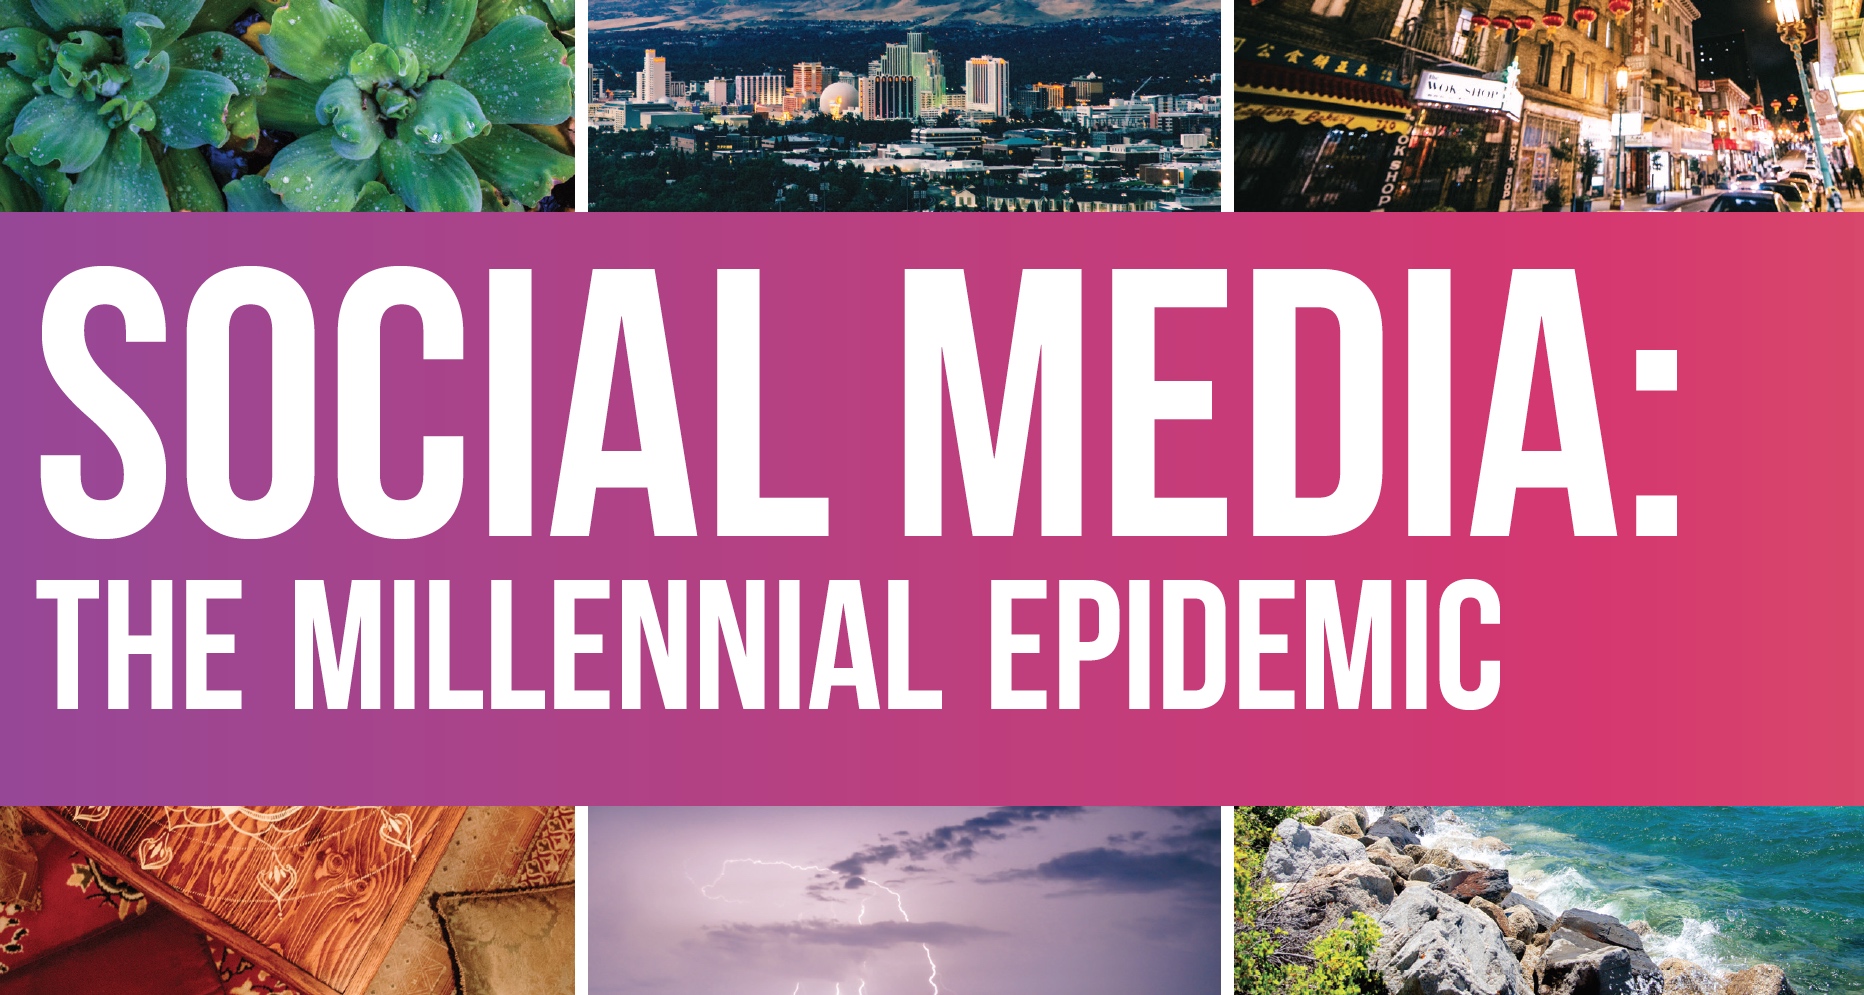 Social Media: The Millennial Epidemic